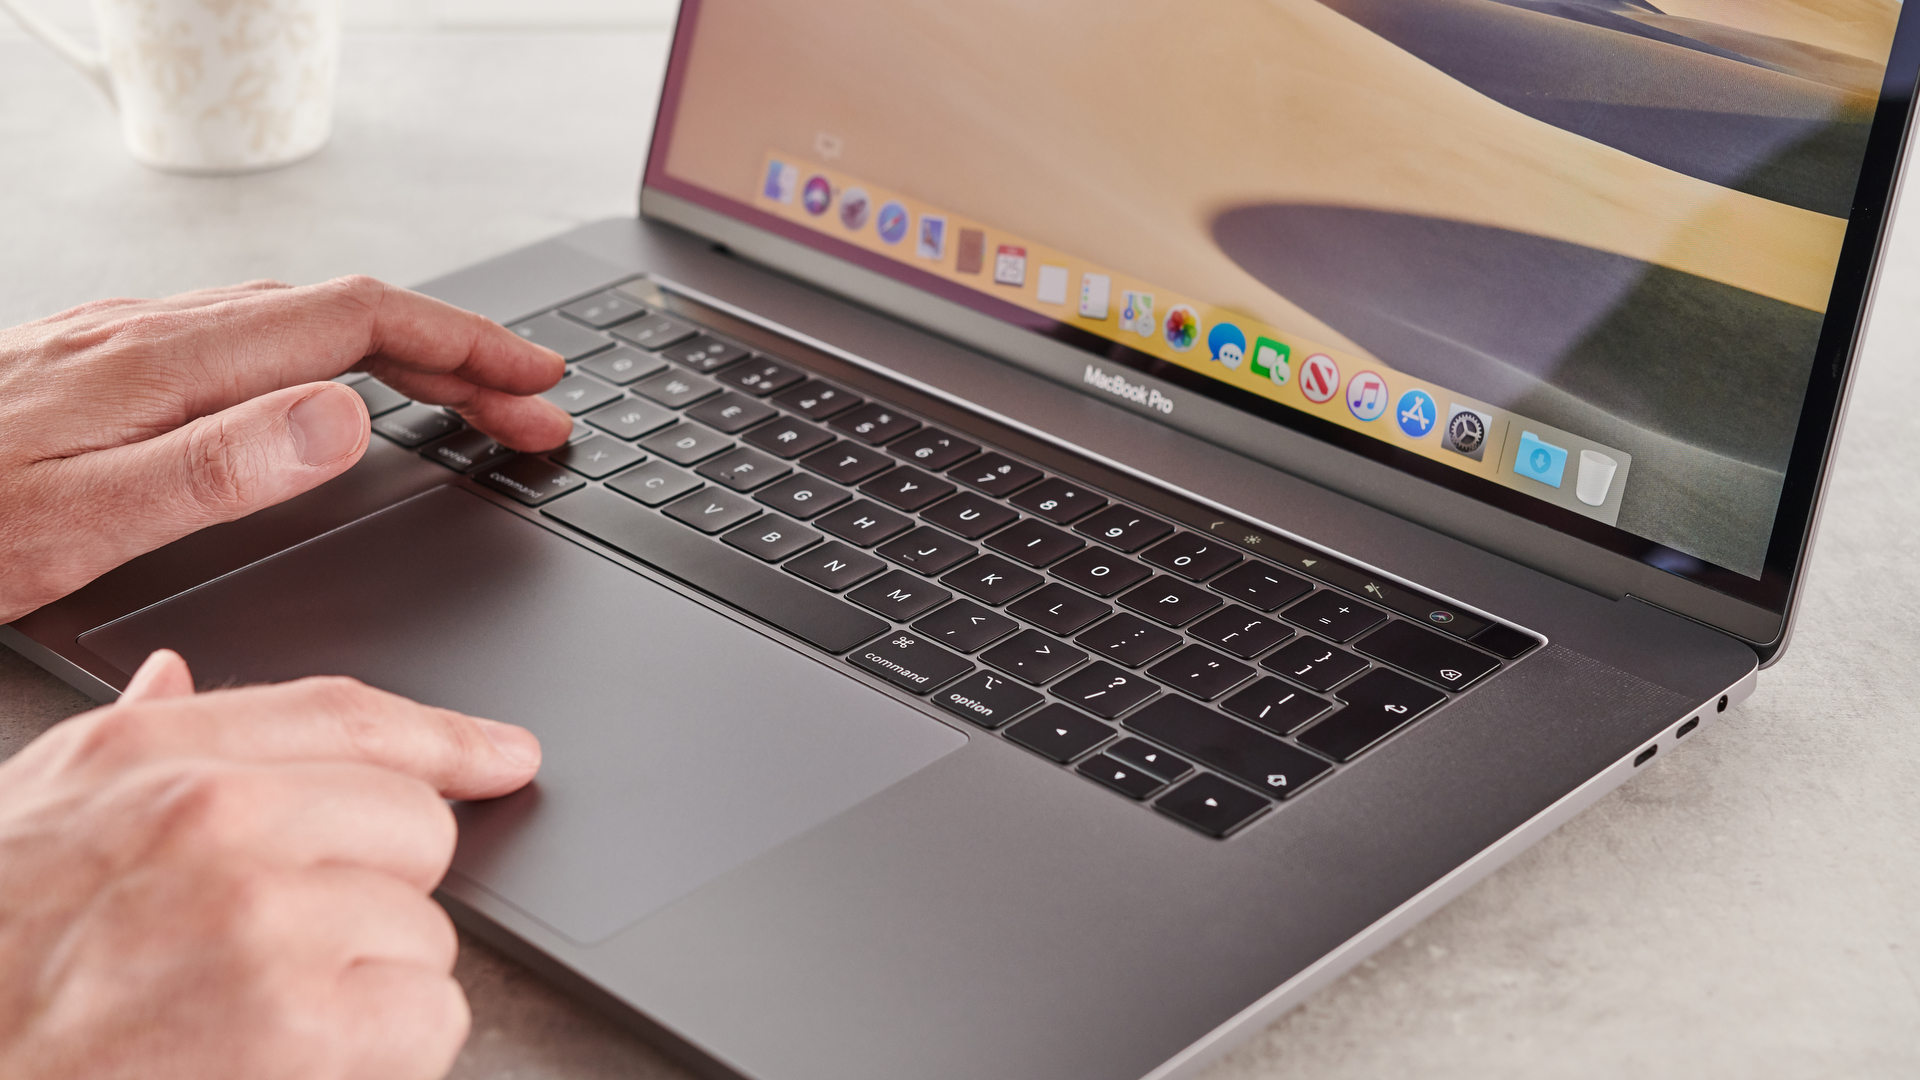 Best 15-inch laptop: MacBook Pro (15-inch, 2019)